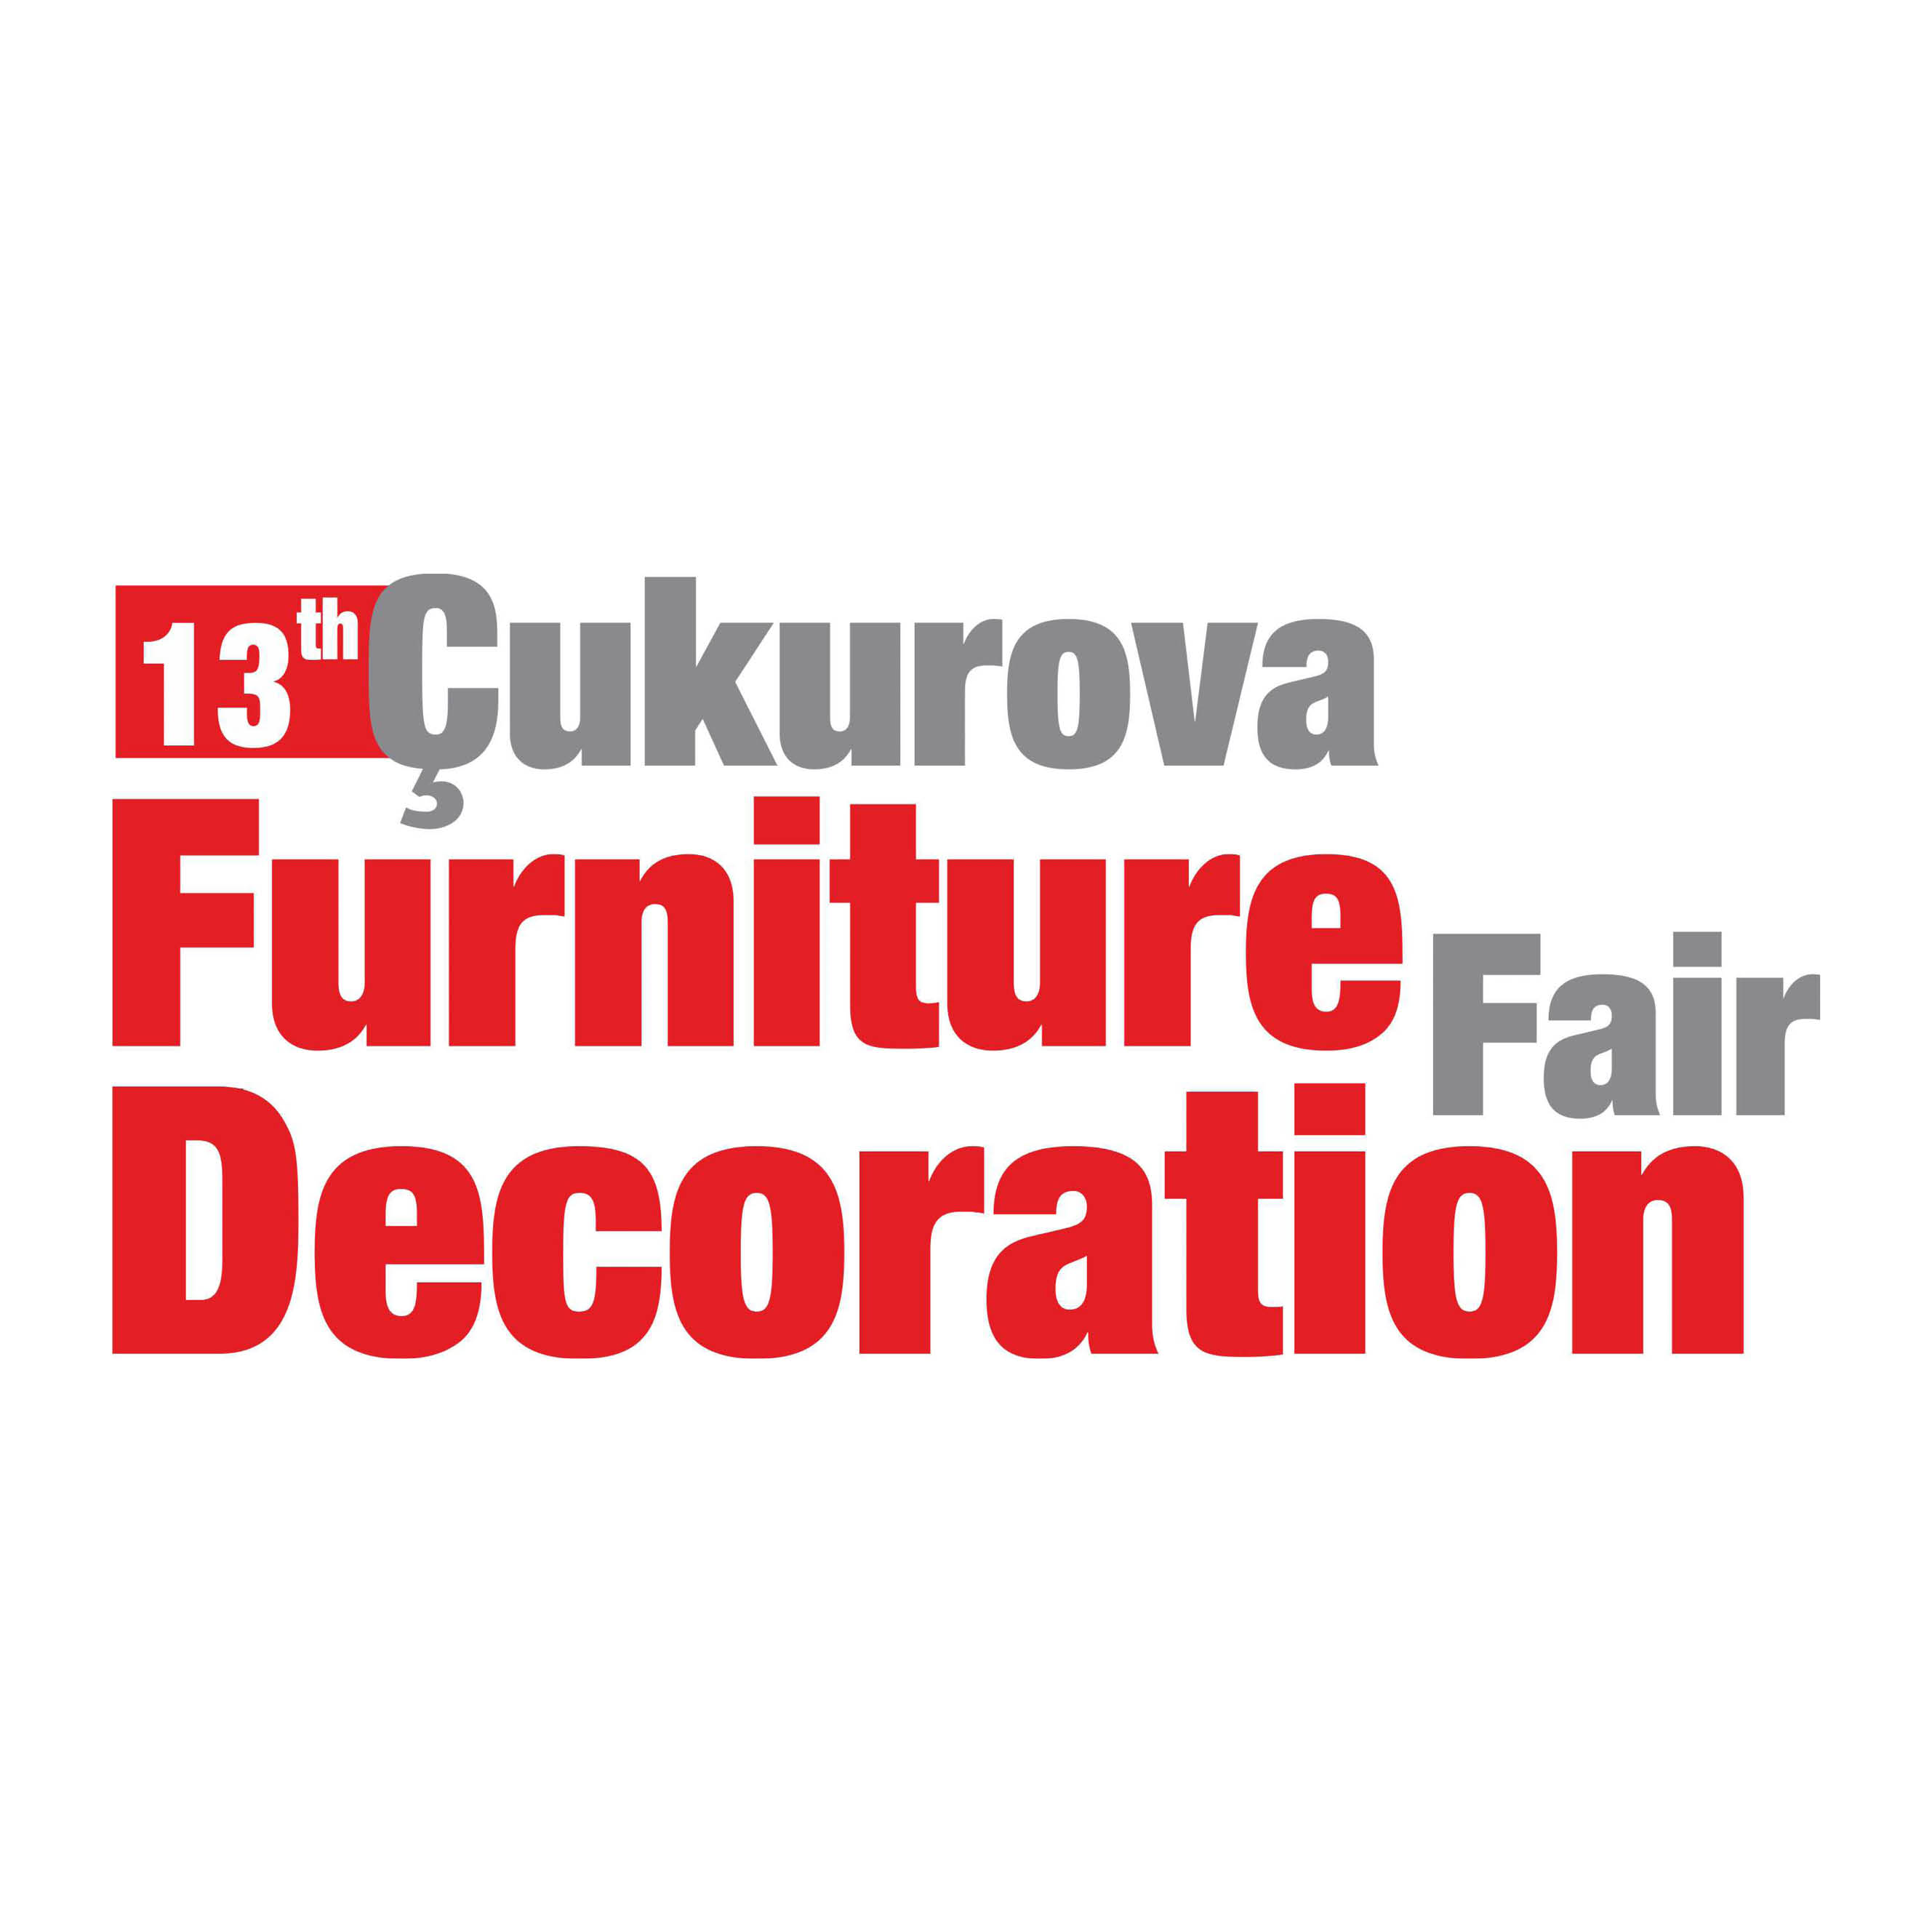 Cukurova Furniture and Decoration Logo